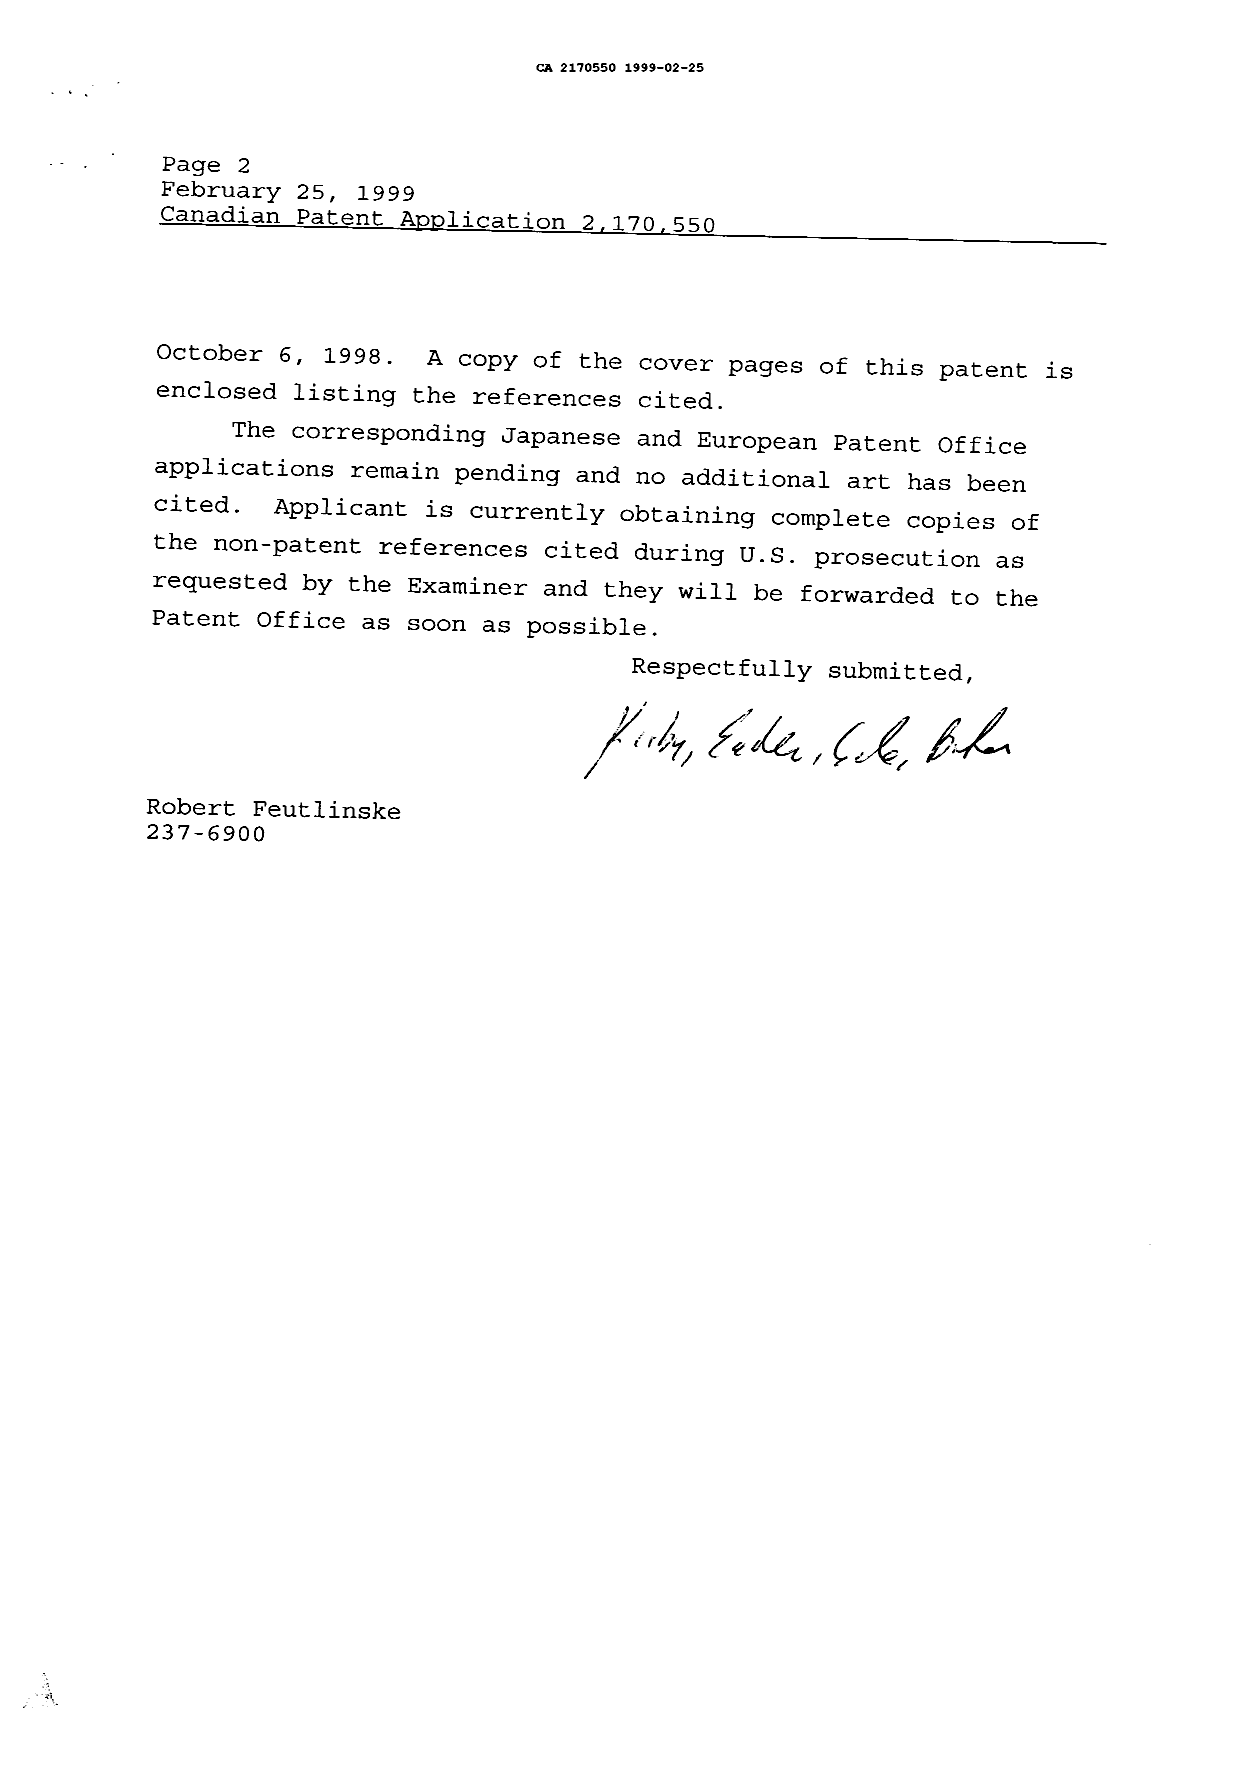 Canadian Patent Document 2170550. Prosecution Correspondence 19990225. Image 2 of 2